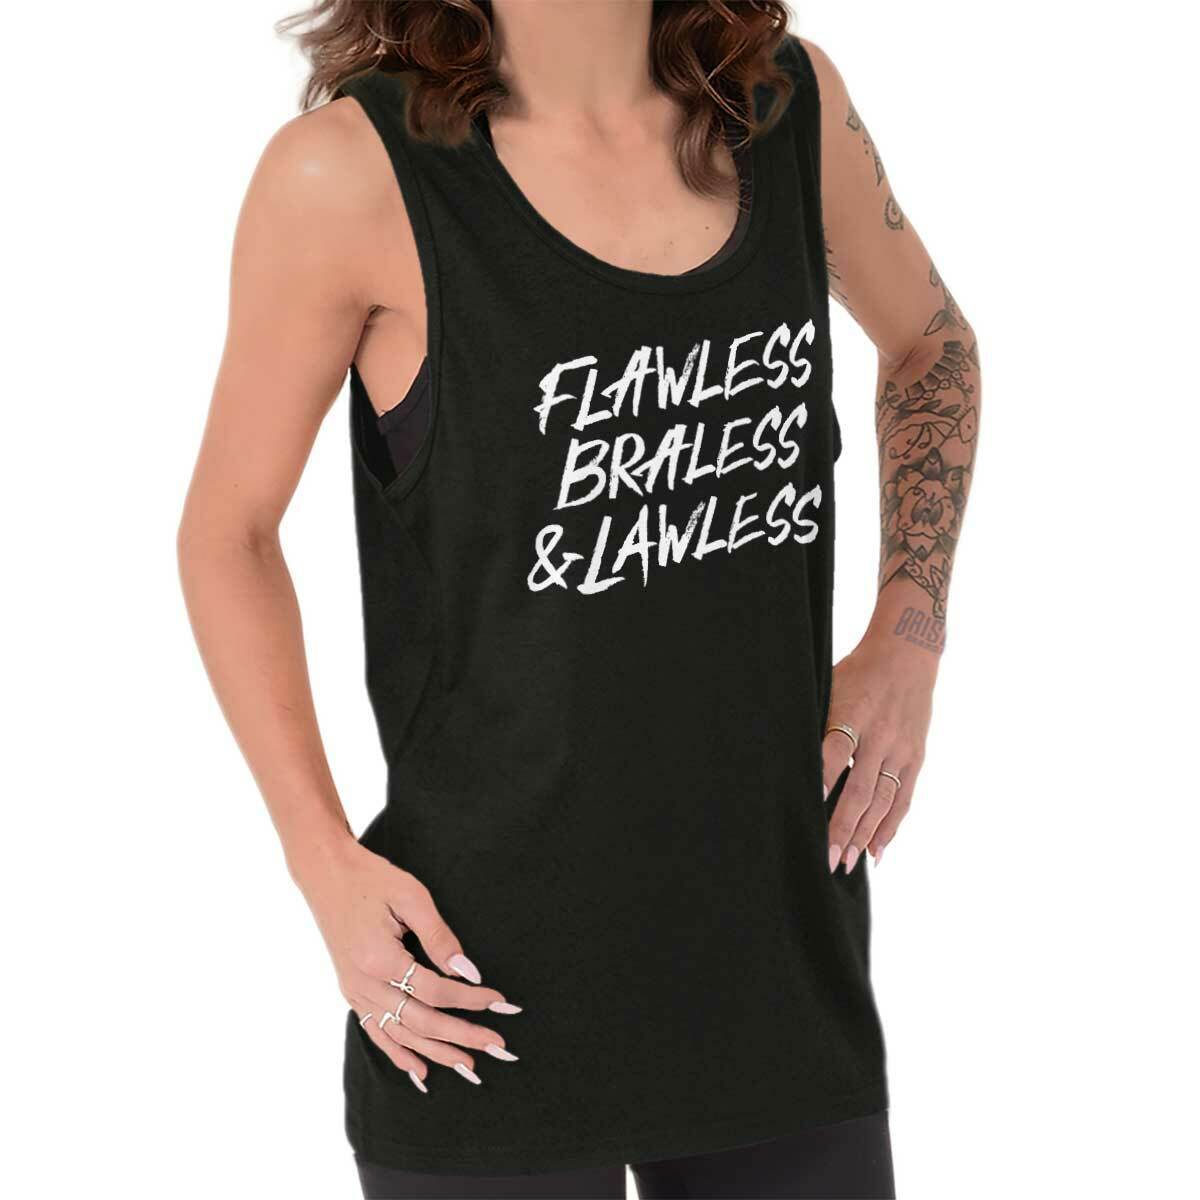 Flawless Braless Girl Power Feminist Rally Womens Tank Top Sleeveless Shirts